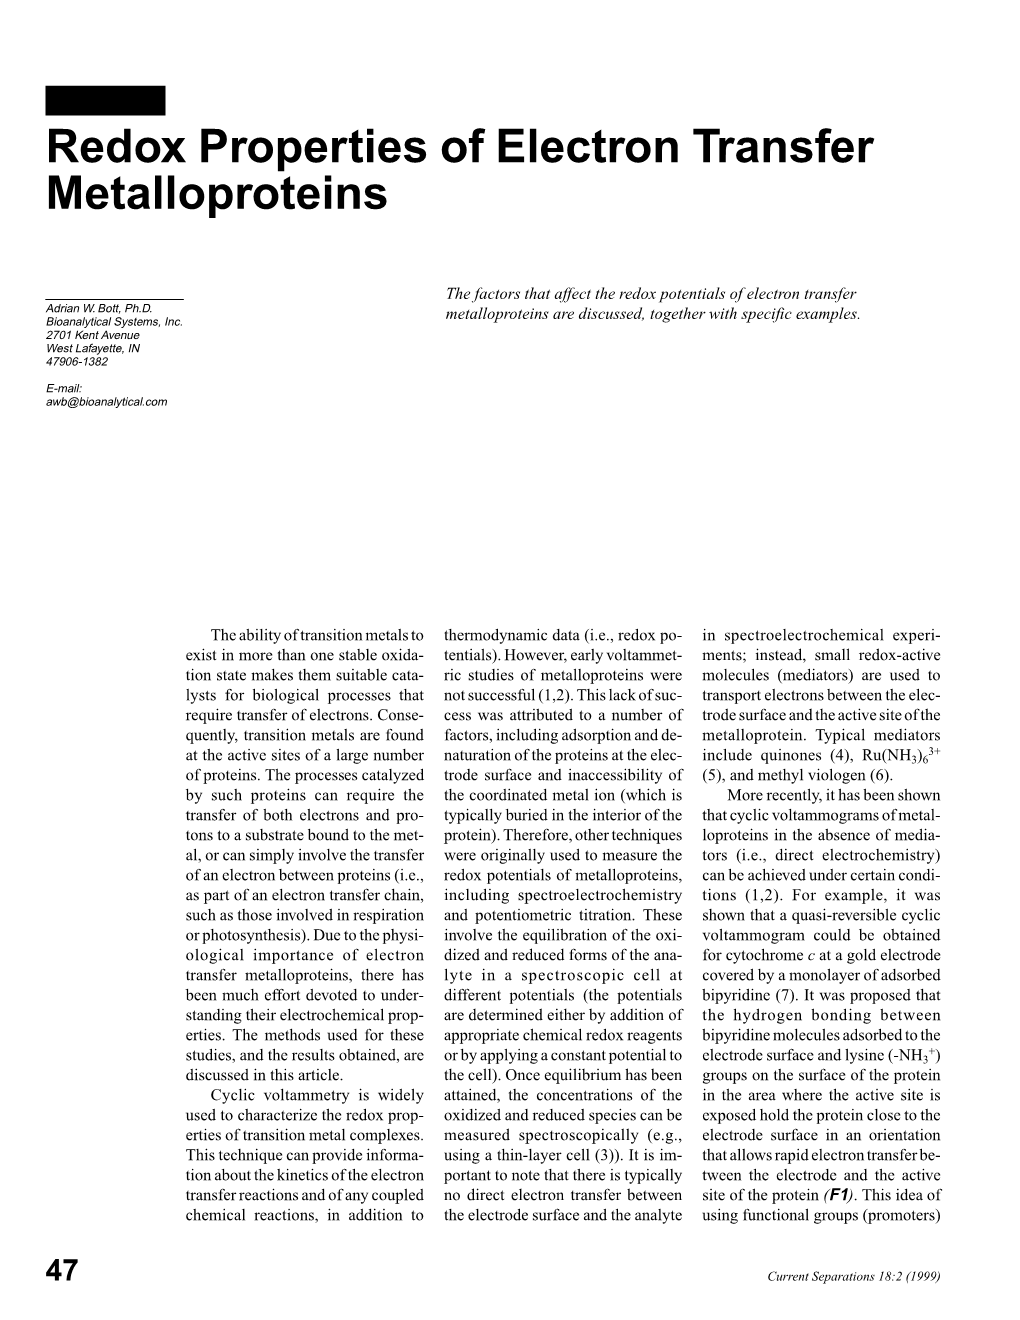 Redox Properties of Electron Transfer Metalloproteins